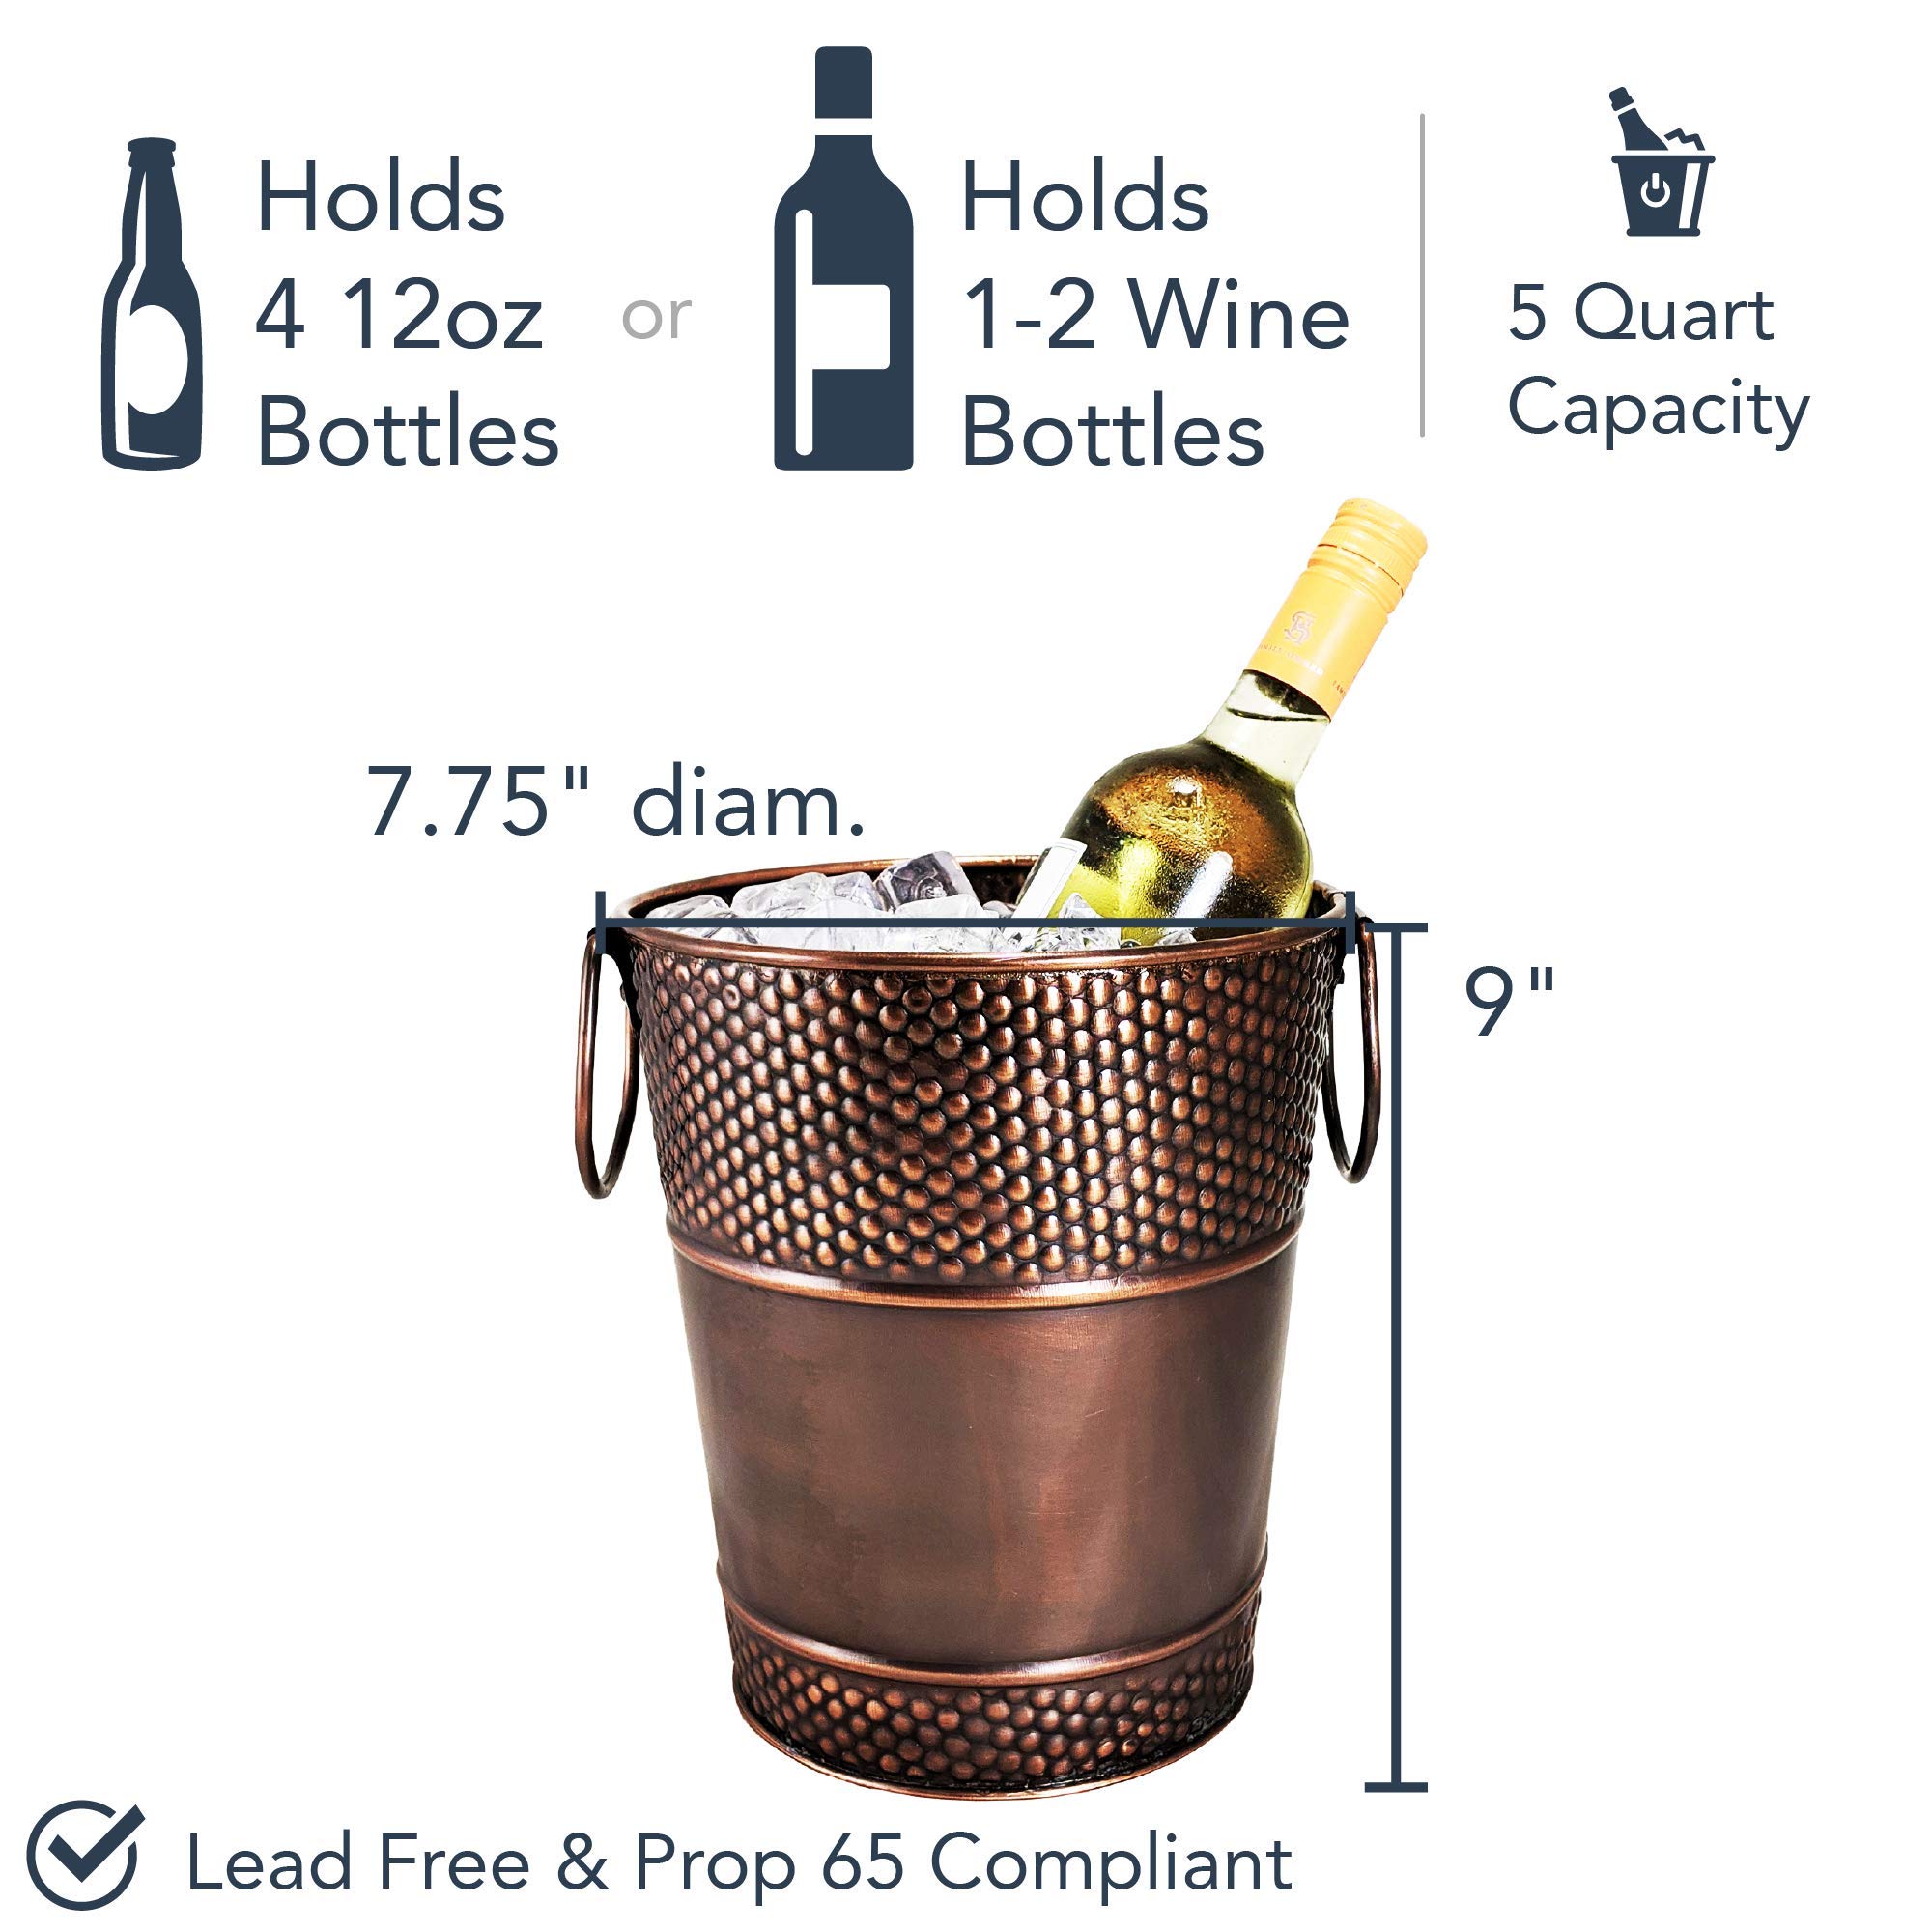 BREKX Berkshire Copper Finish Galvanized Wine Bucket, Leak & Rust Resistant, Sealed Ice and Drink Holder with Handles, 5 Quarts